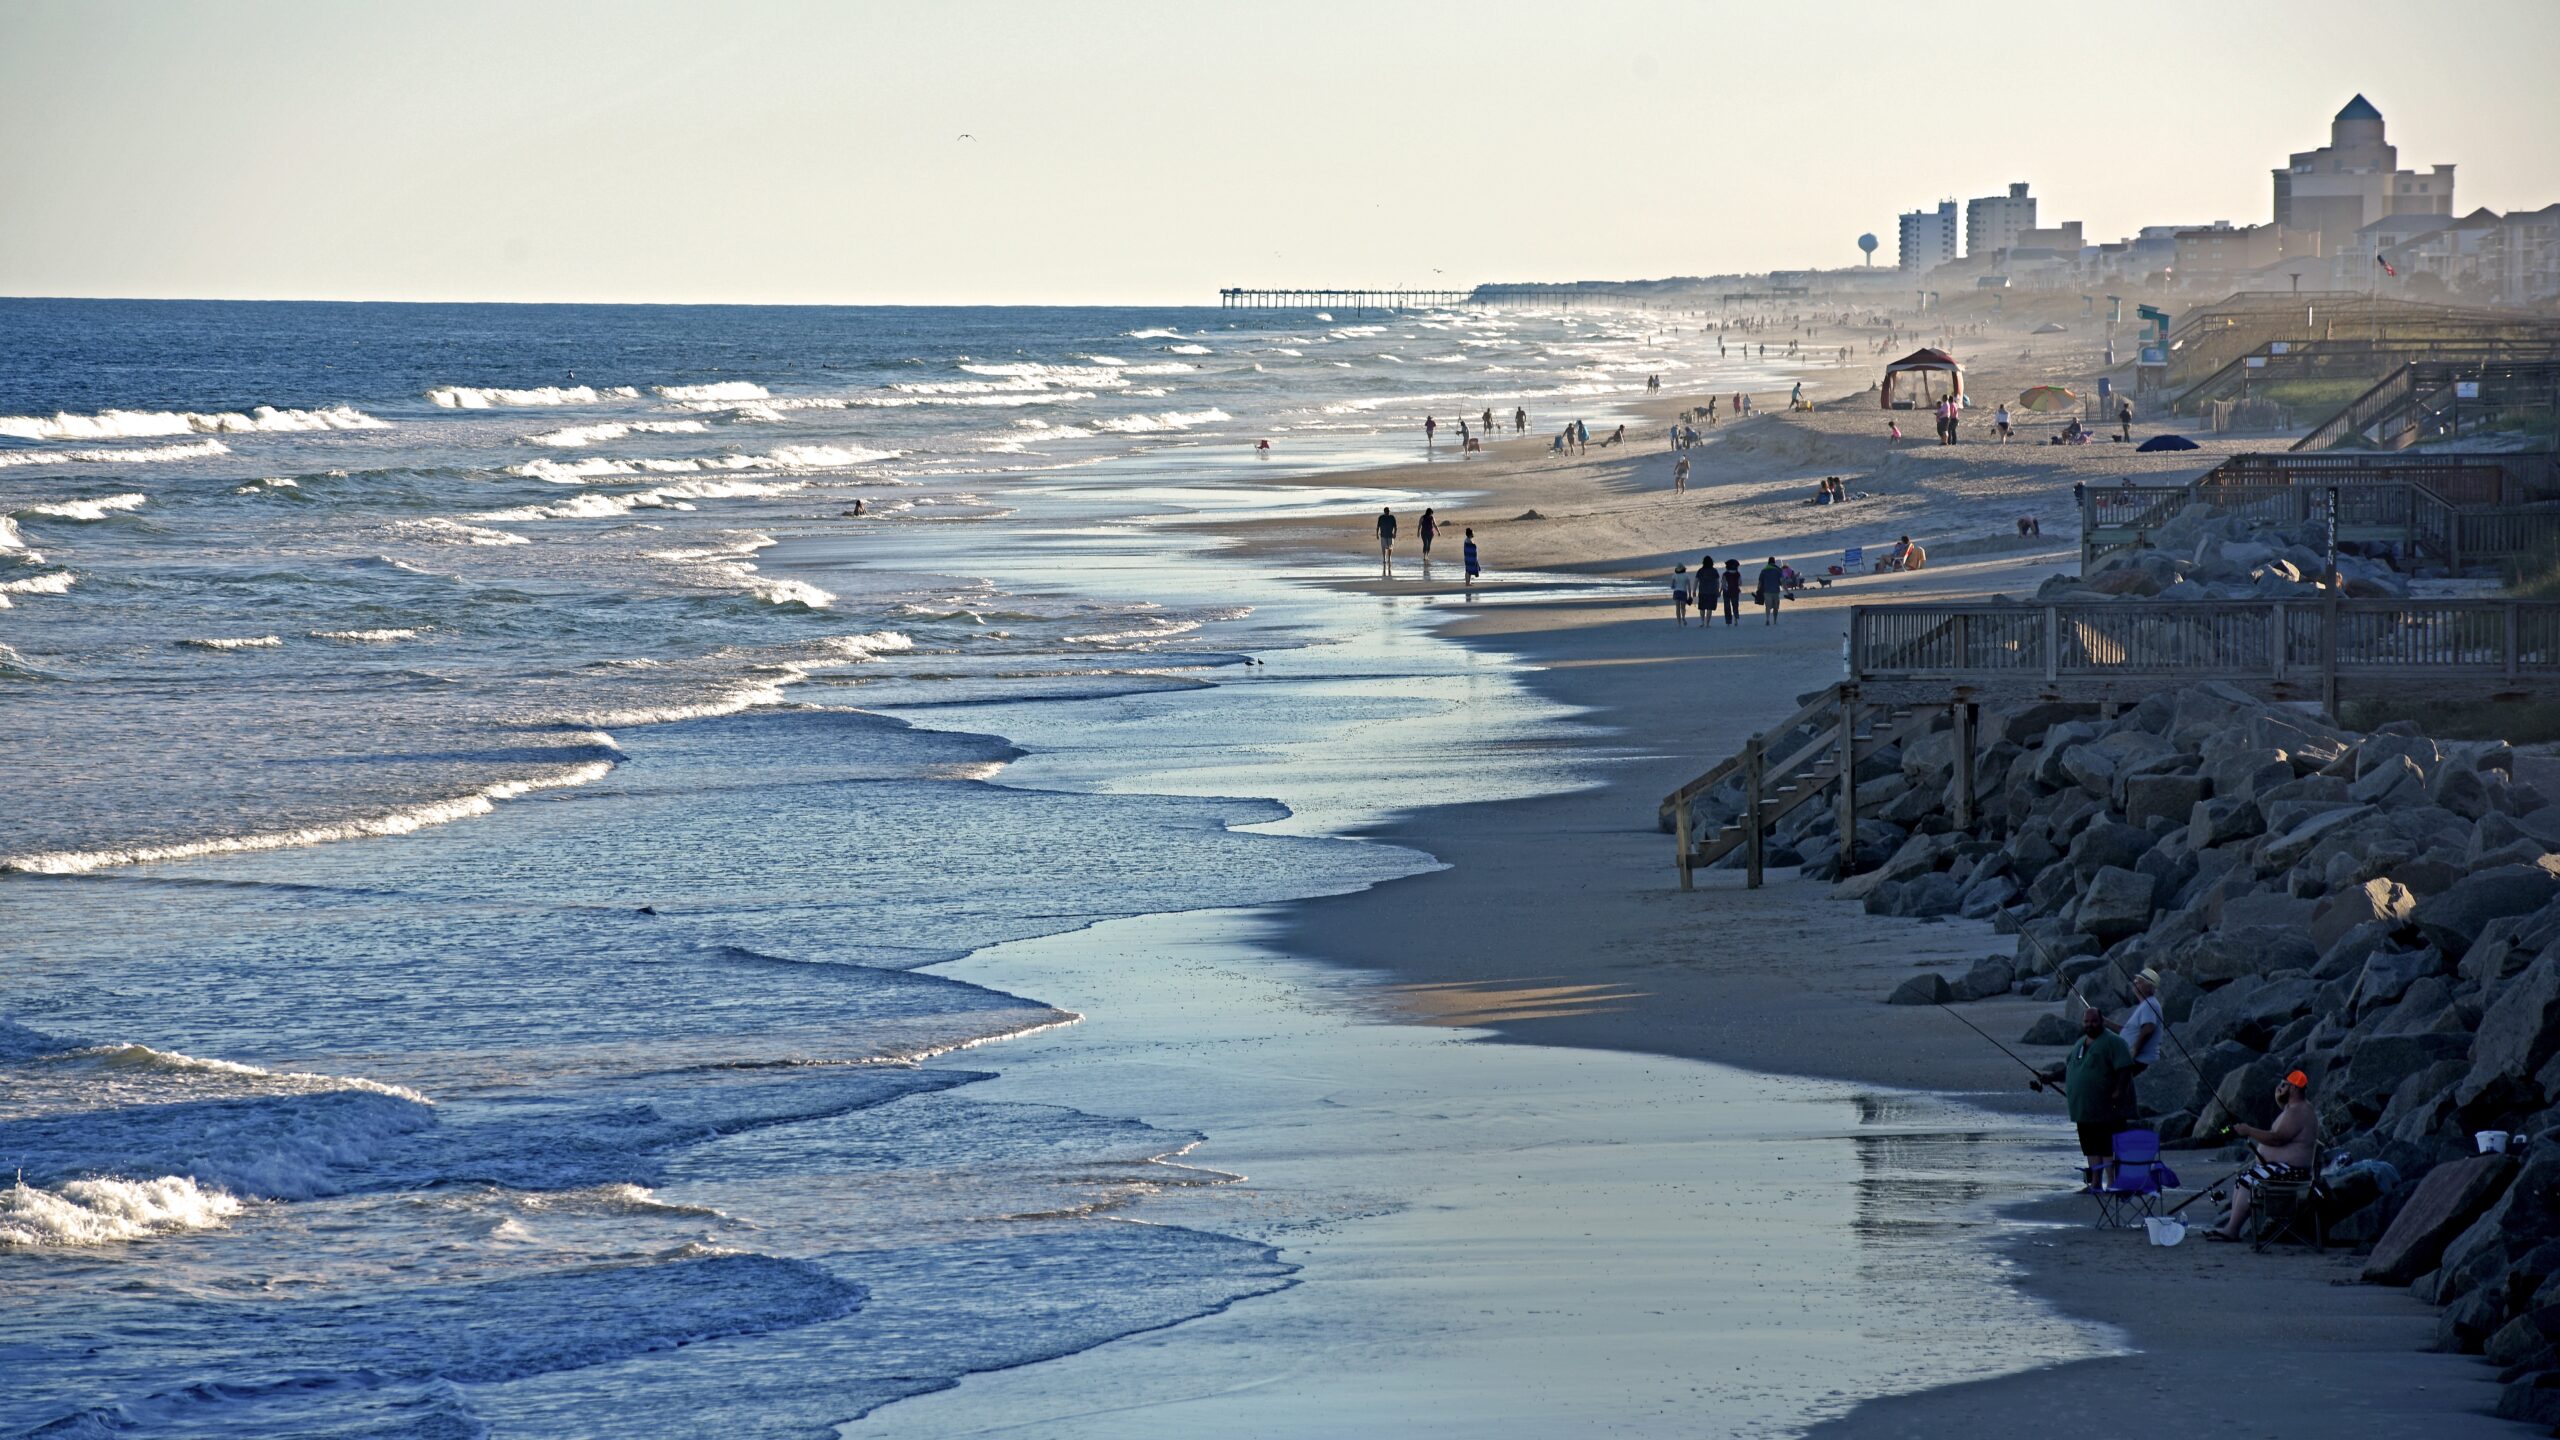 Atlantic Ocean waves rush the shore at Carolina Beach as beachgoers walk the surf near sunset.